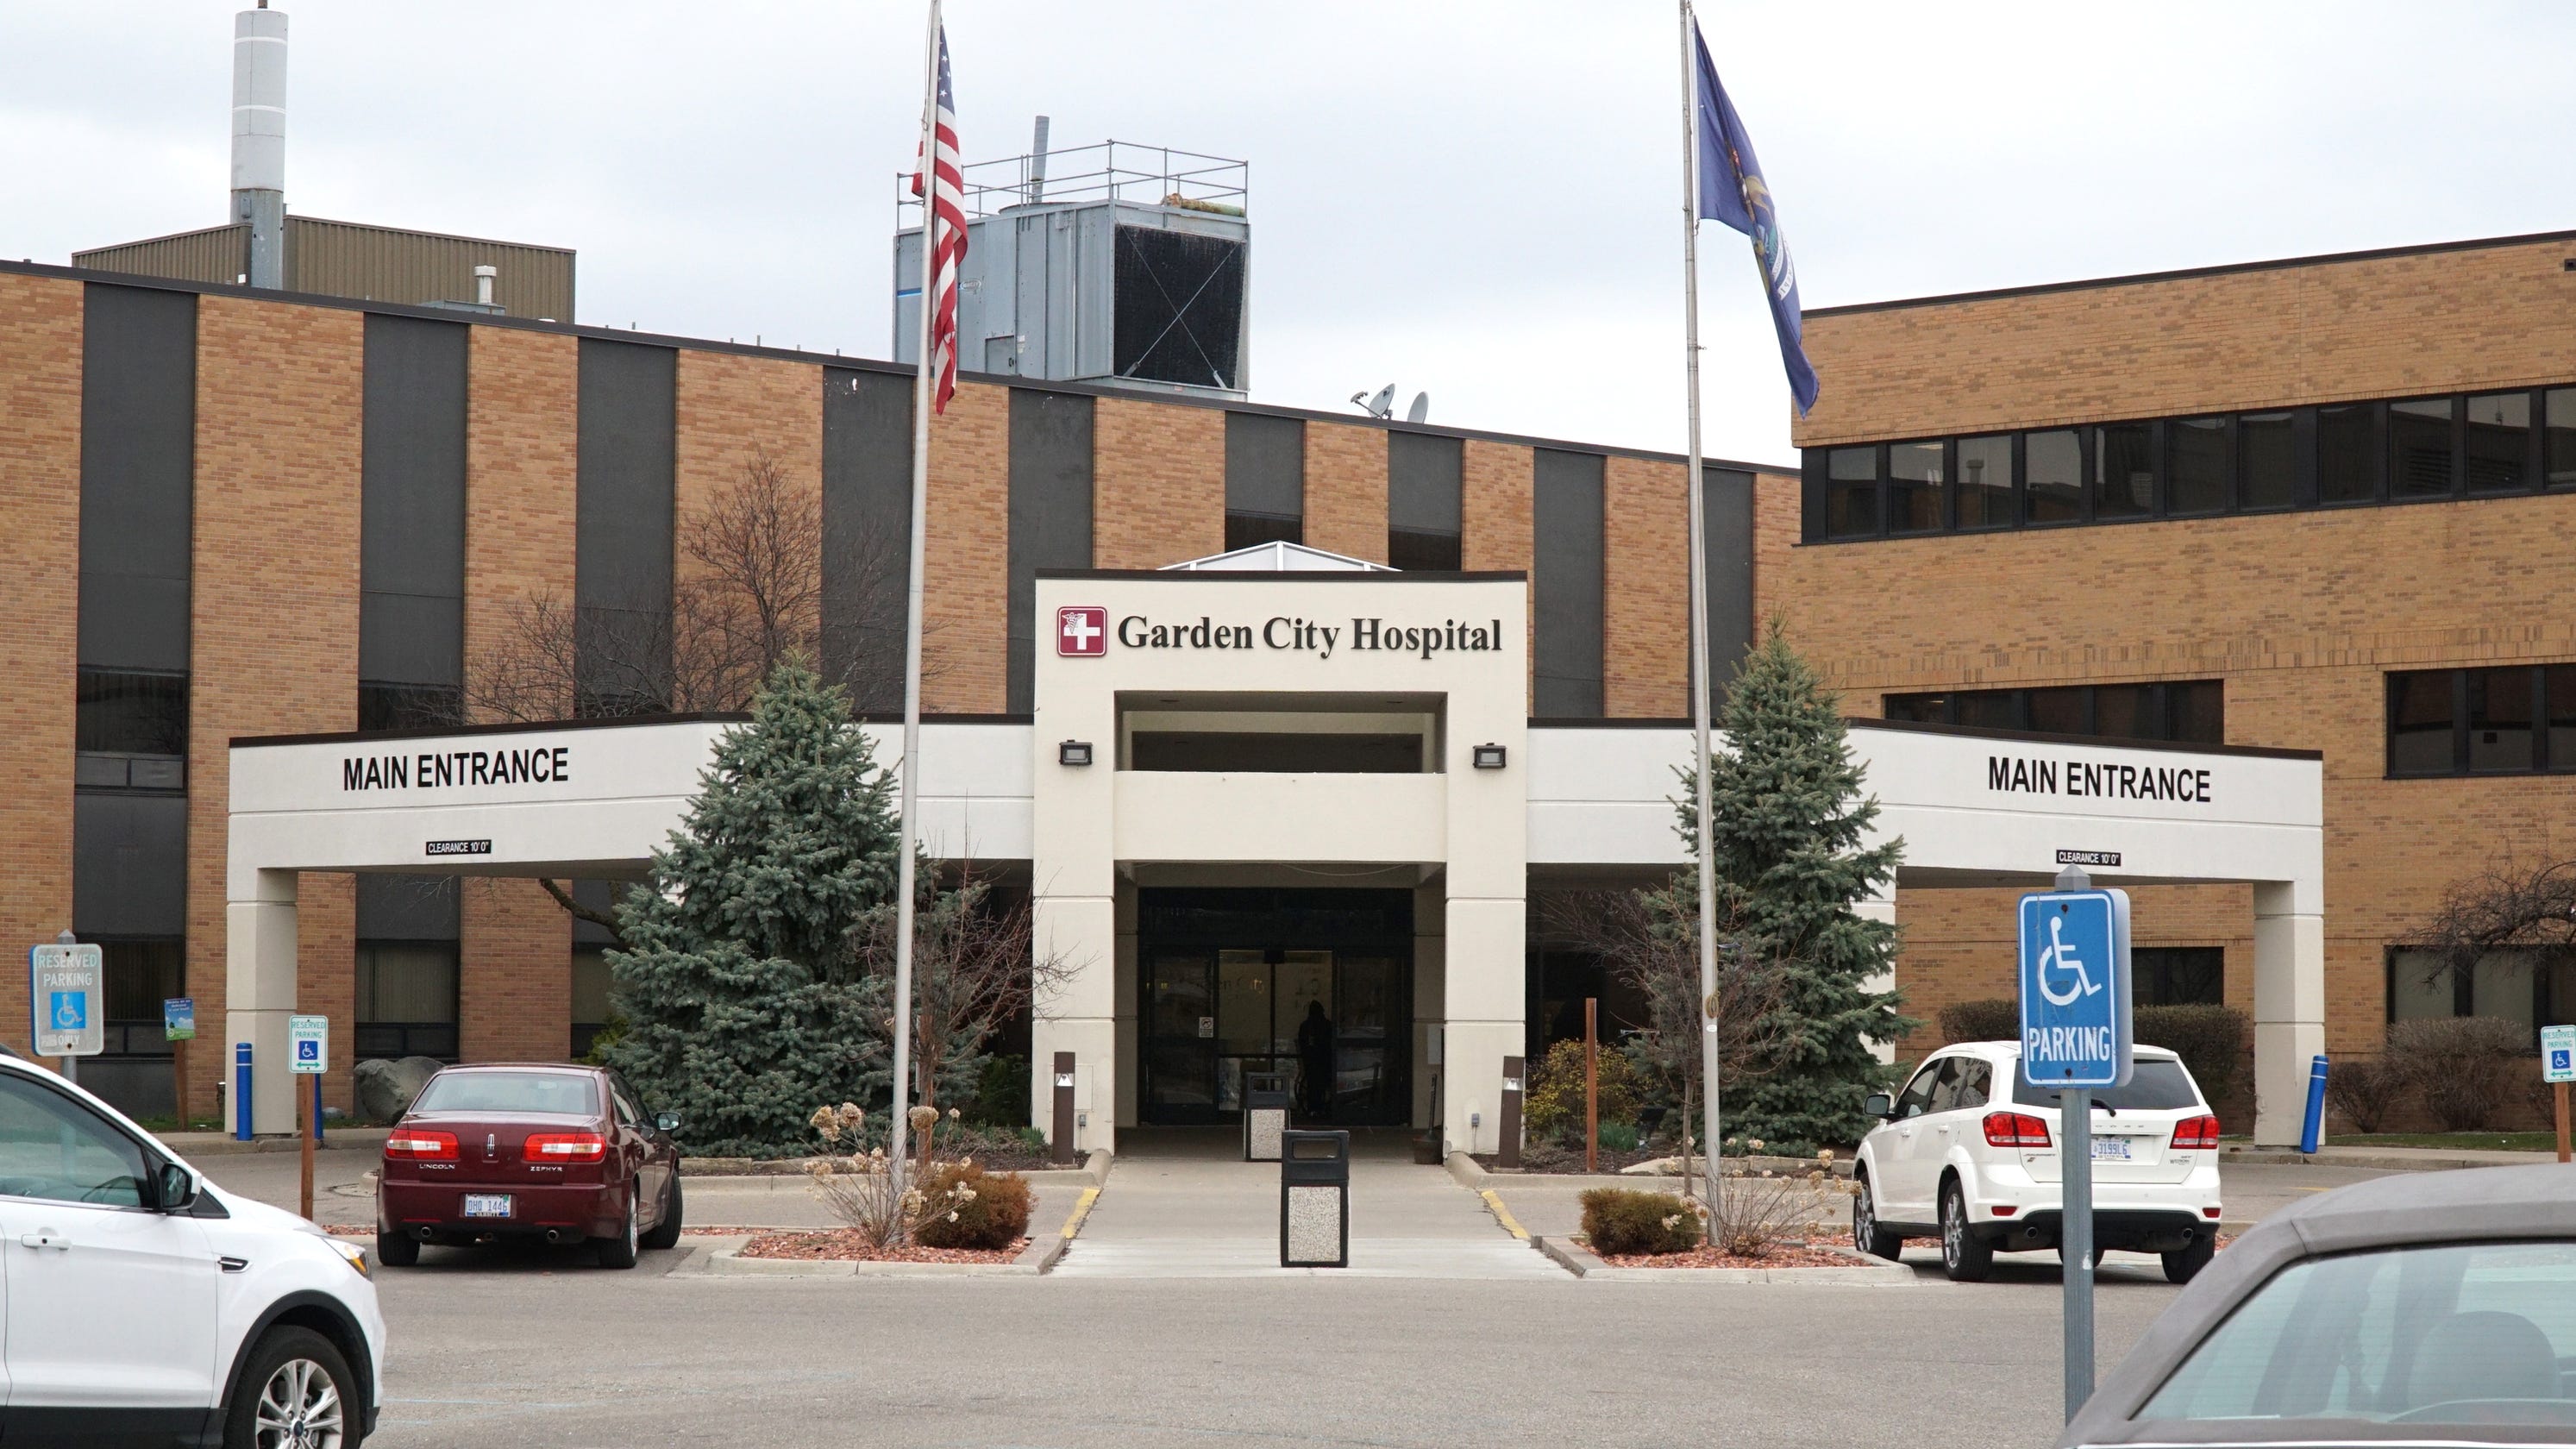 Garden City Hospital to resume non-emergency procedures